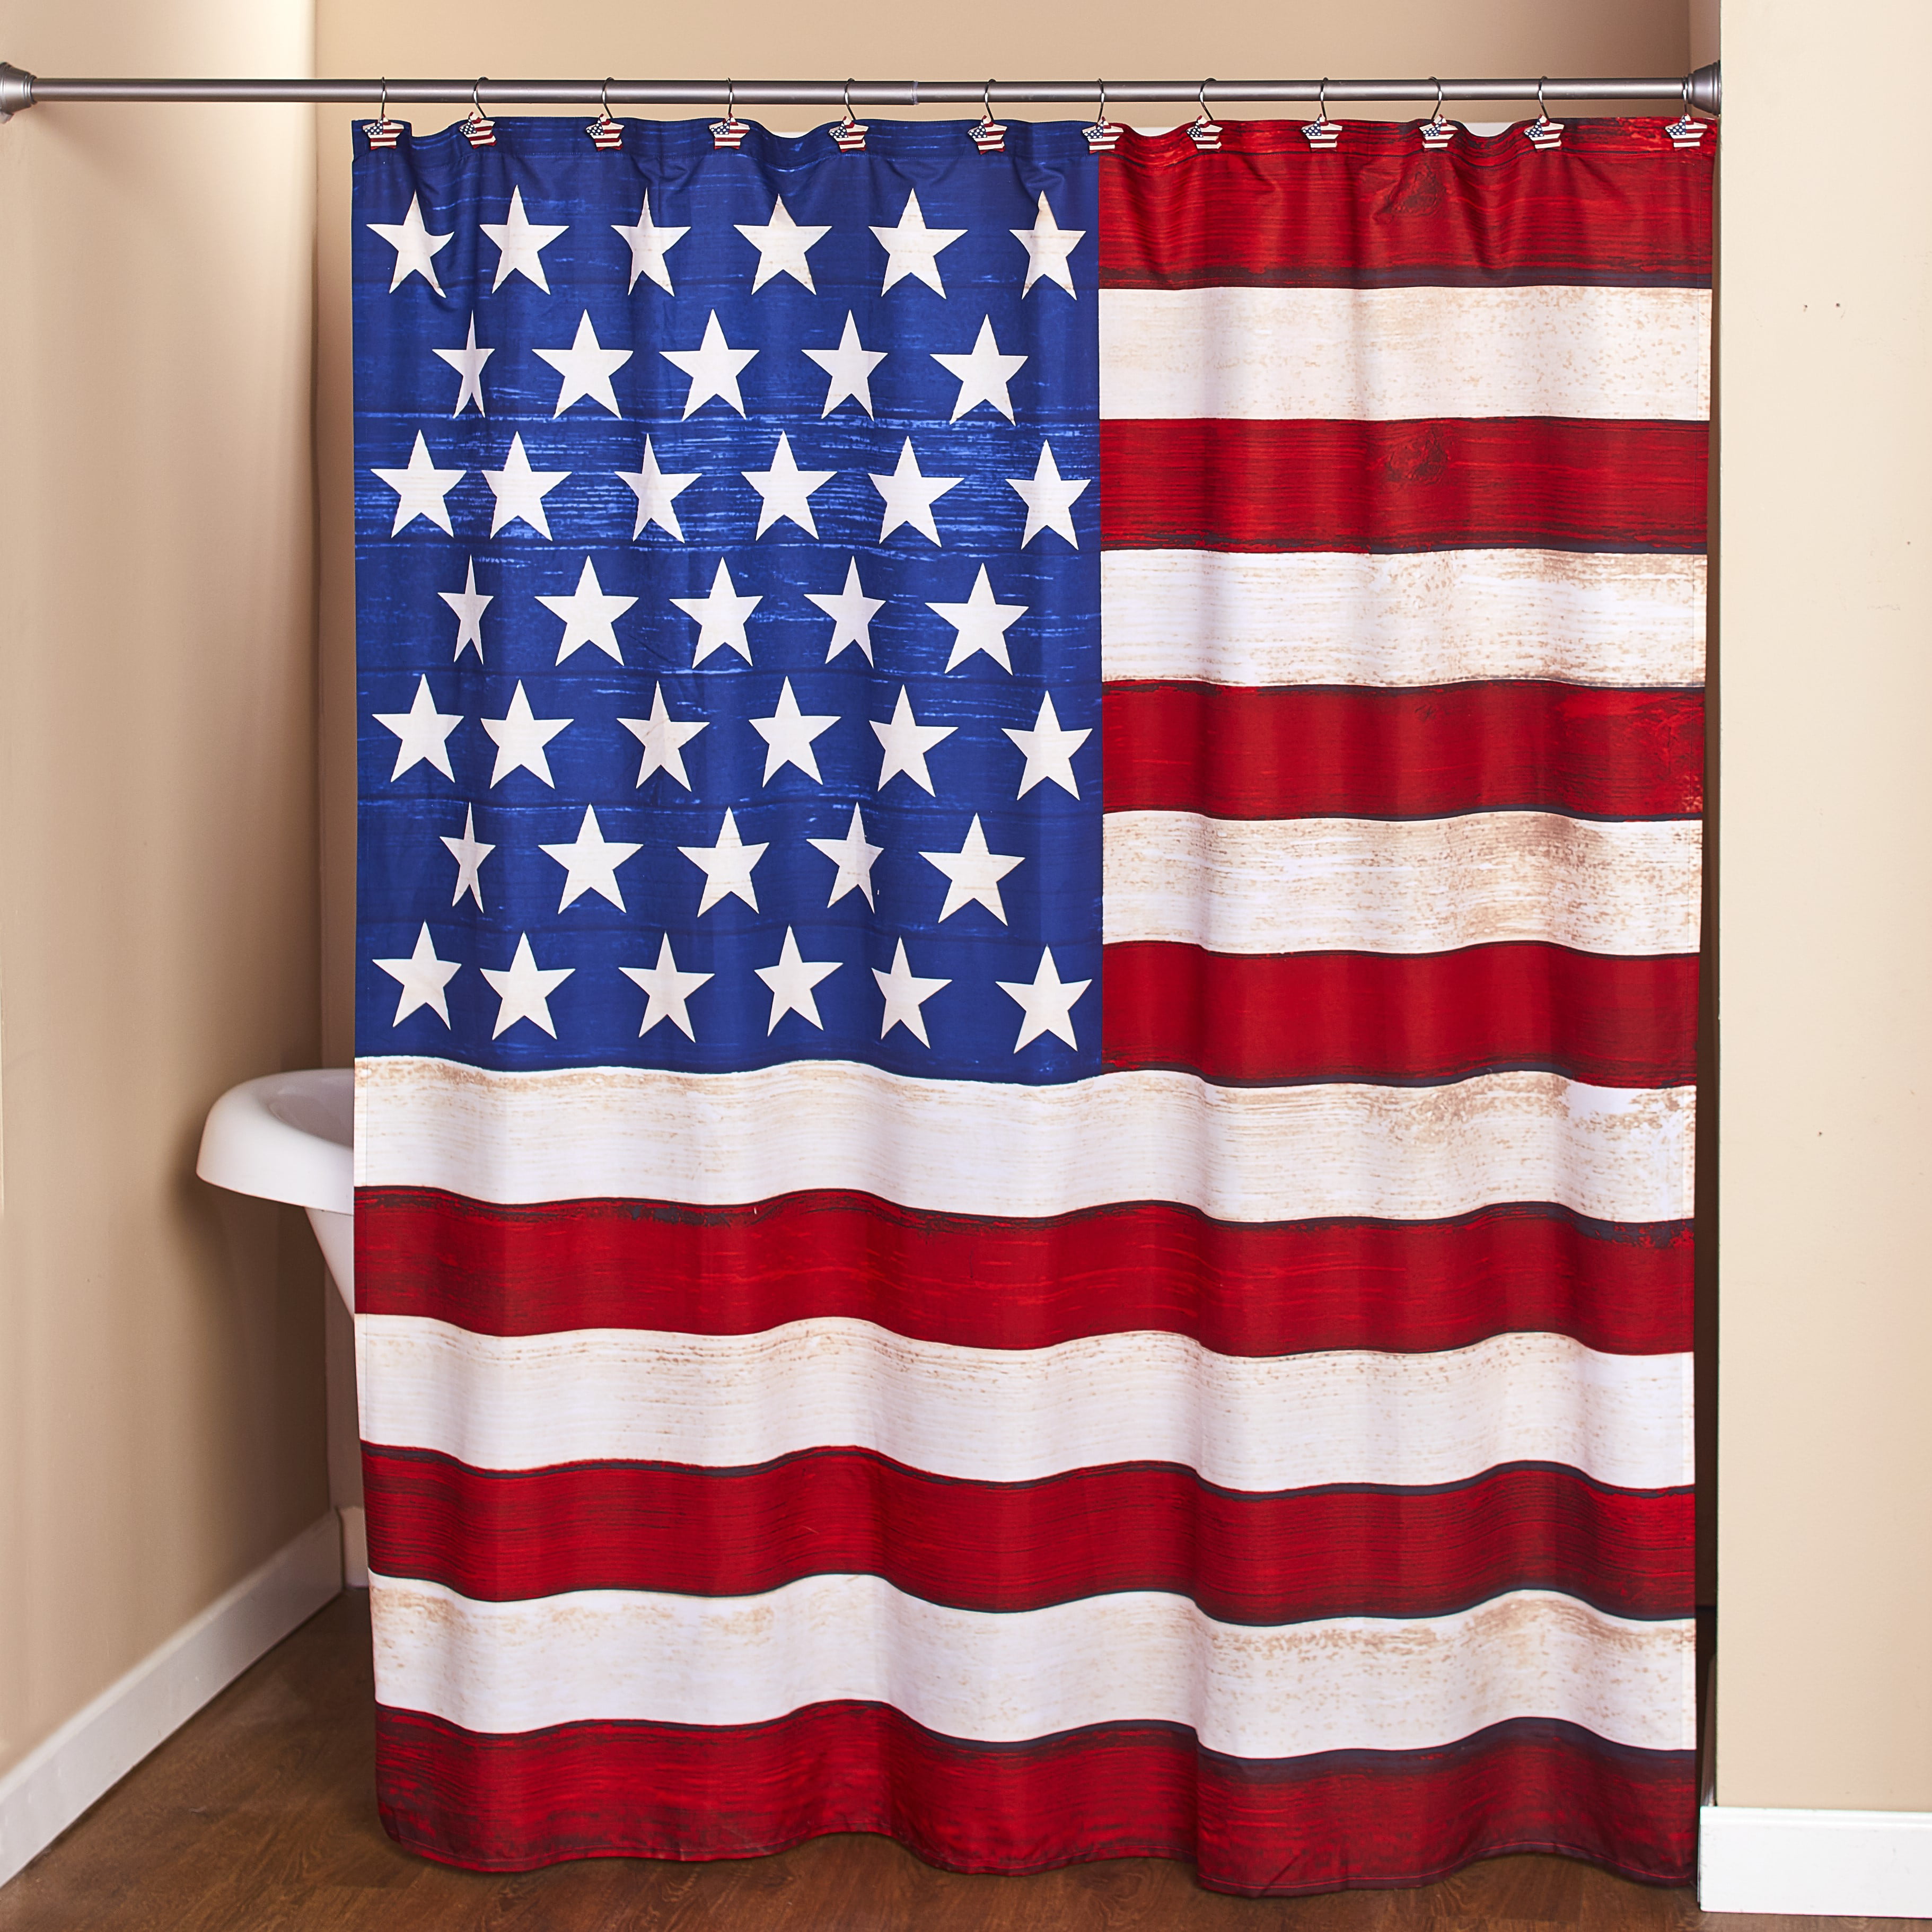 Red Striped White Stars Trump America 2020 Shower Curtain Set For Bathroom Decor 